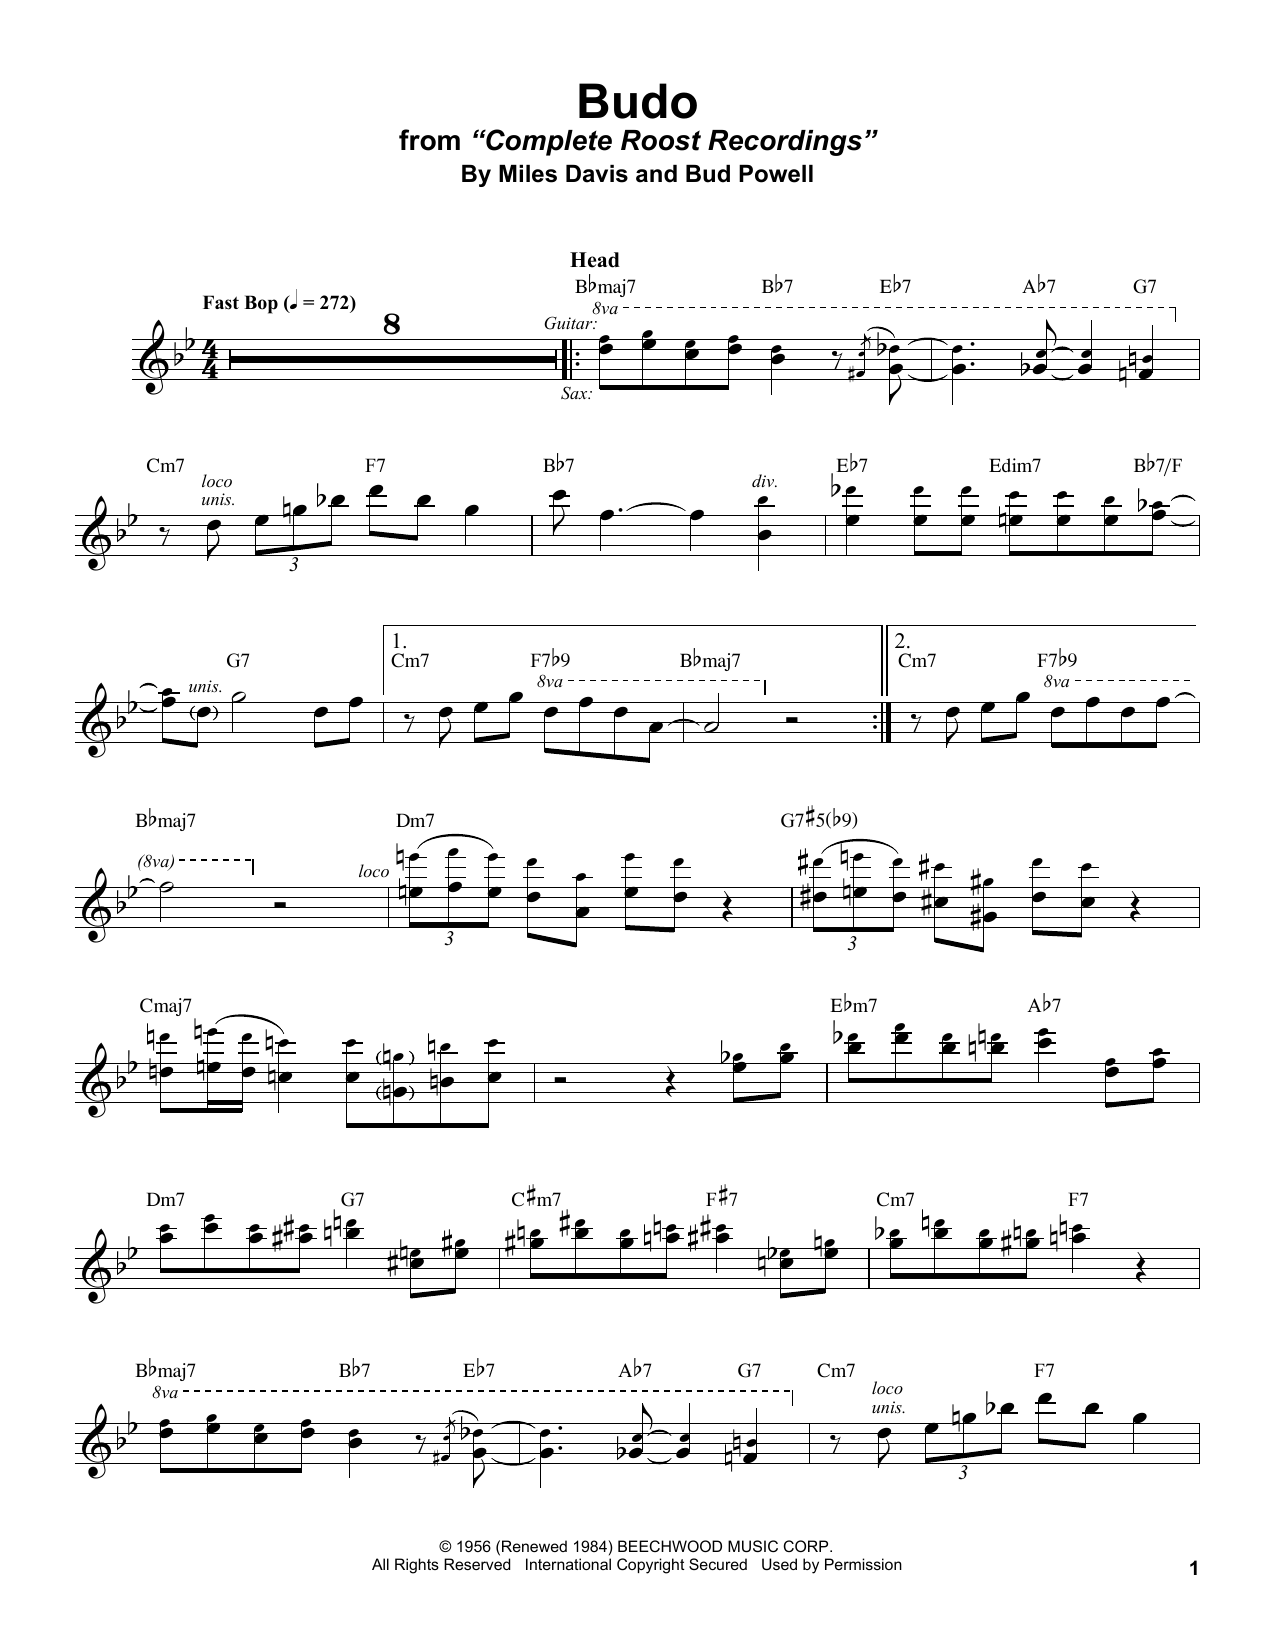 Stan Getz Budo Sheet Music Notes & Chords for Alto Sax Transcription - Download or Print PDF